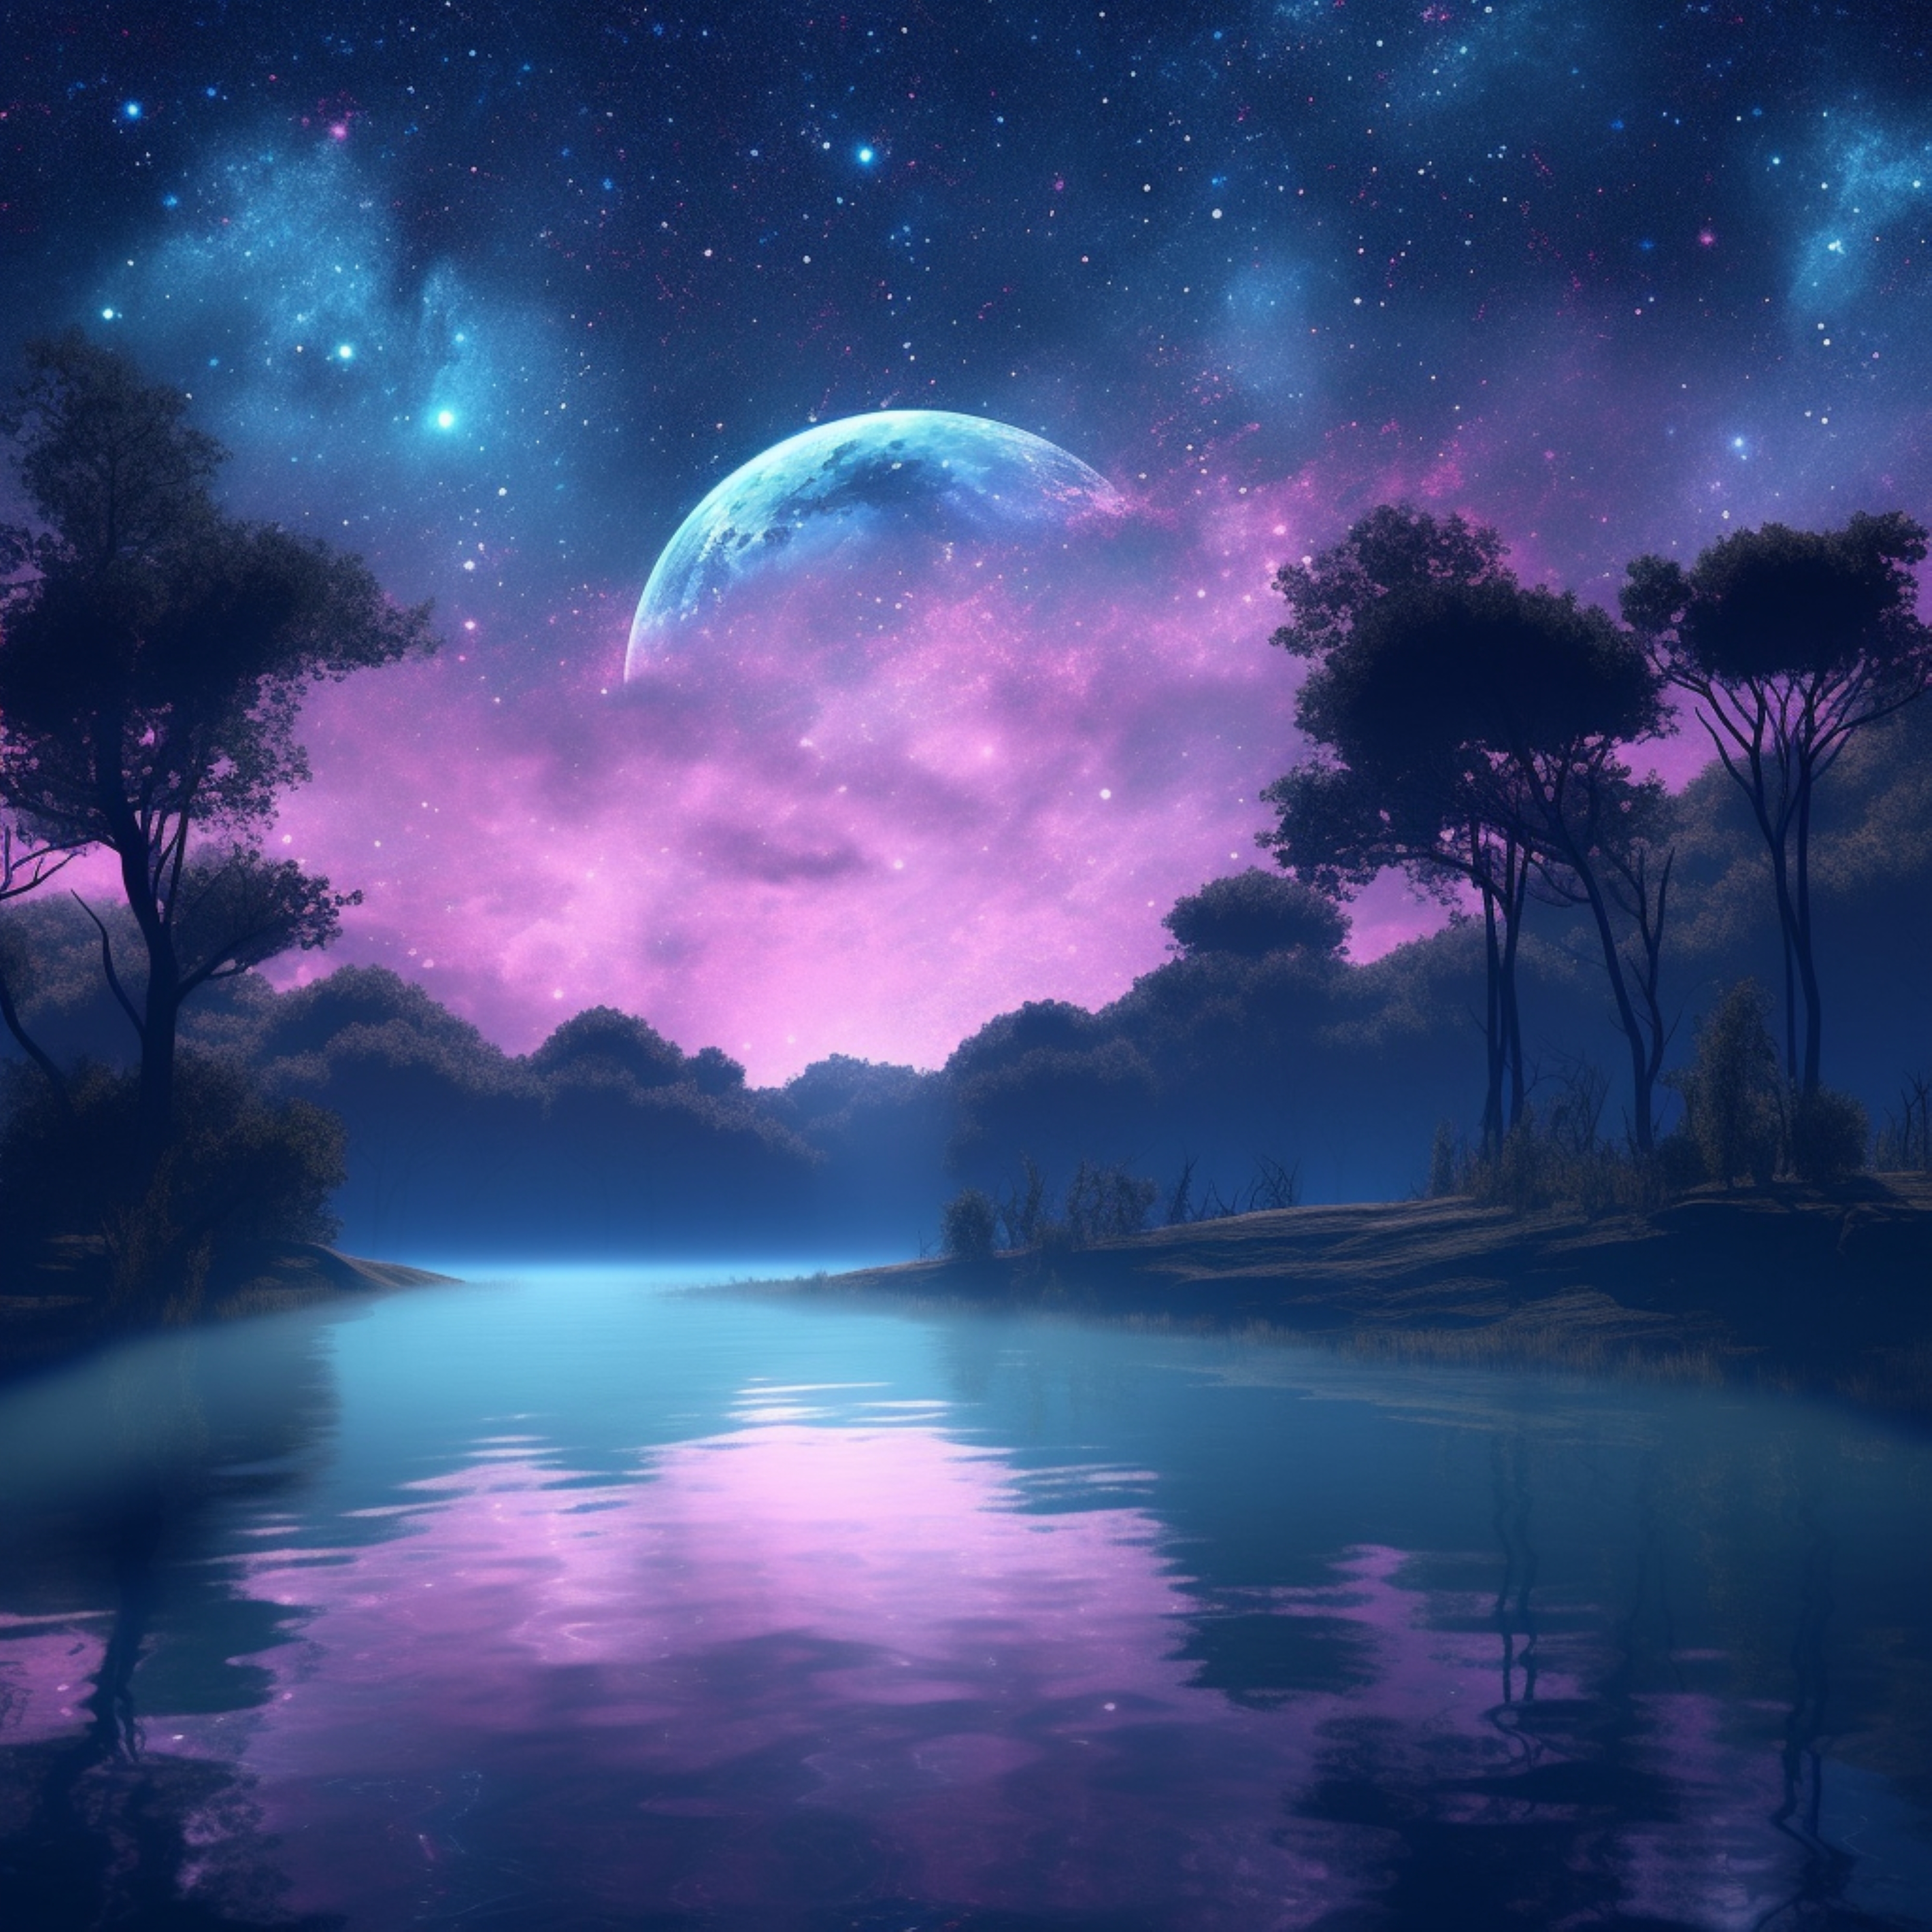 dreamy night sky illustration design